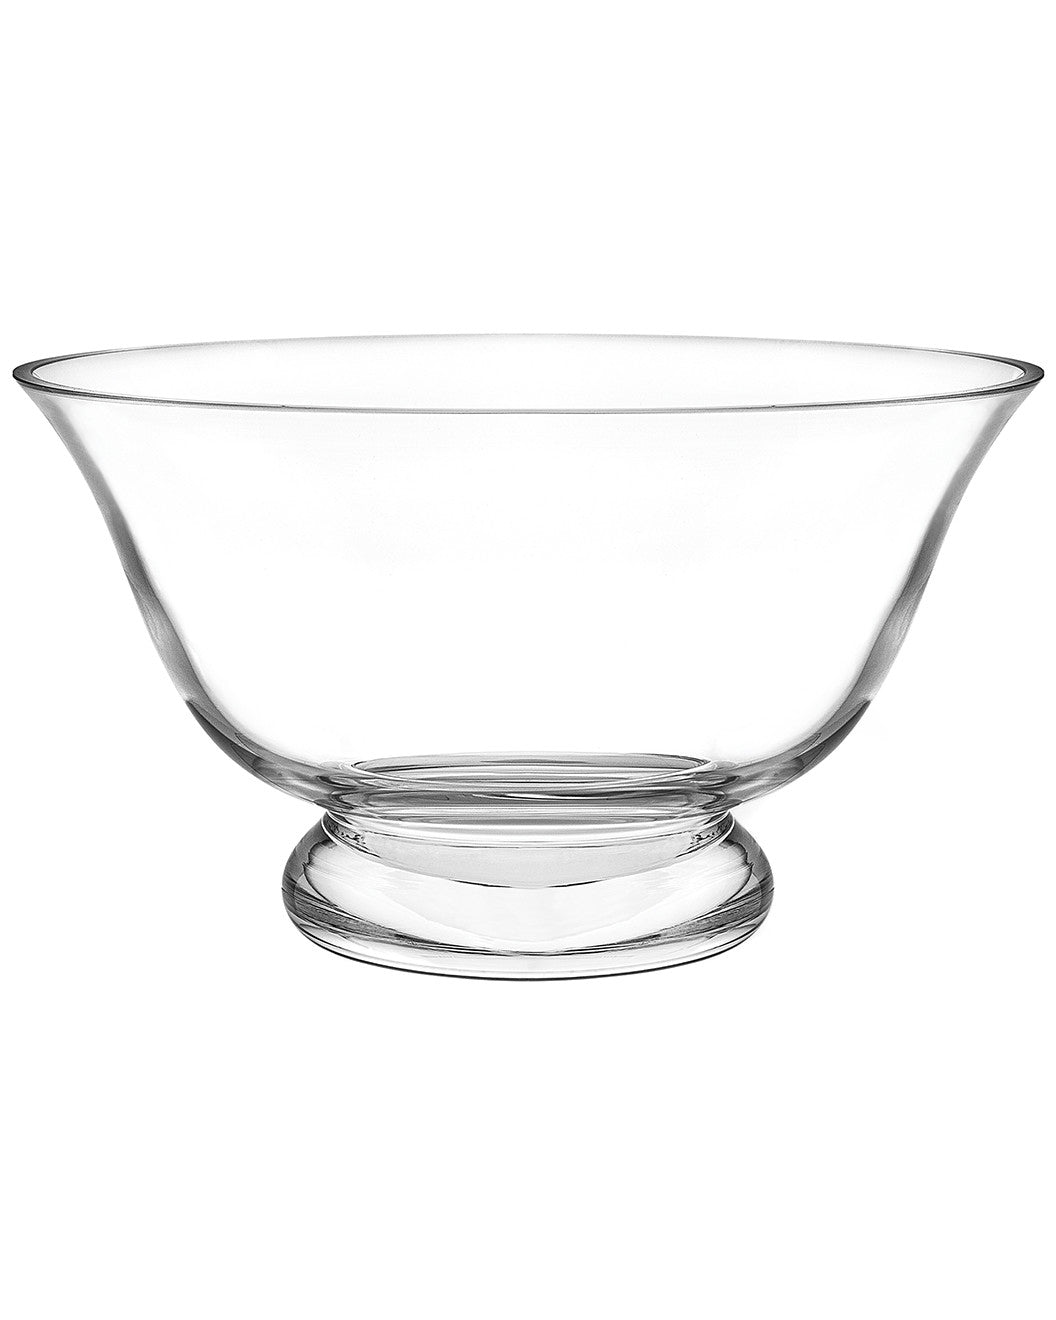 glass bowl serving paul revere godinger pedastal bowl clear